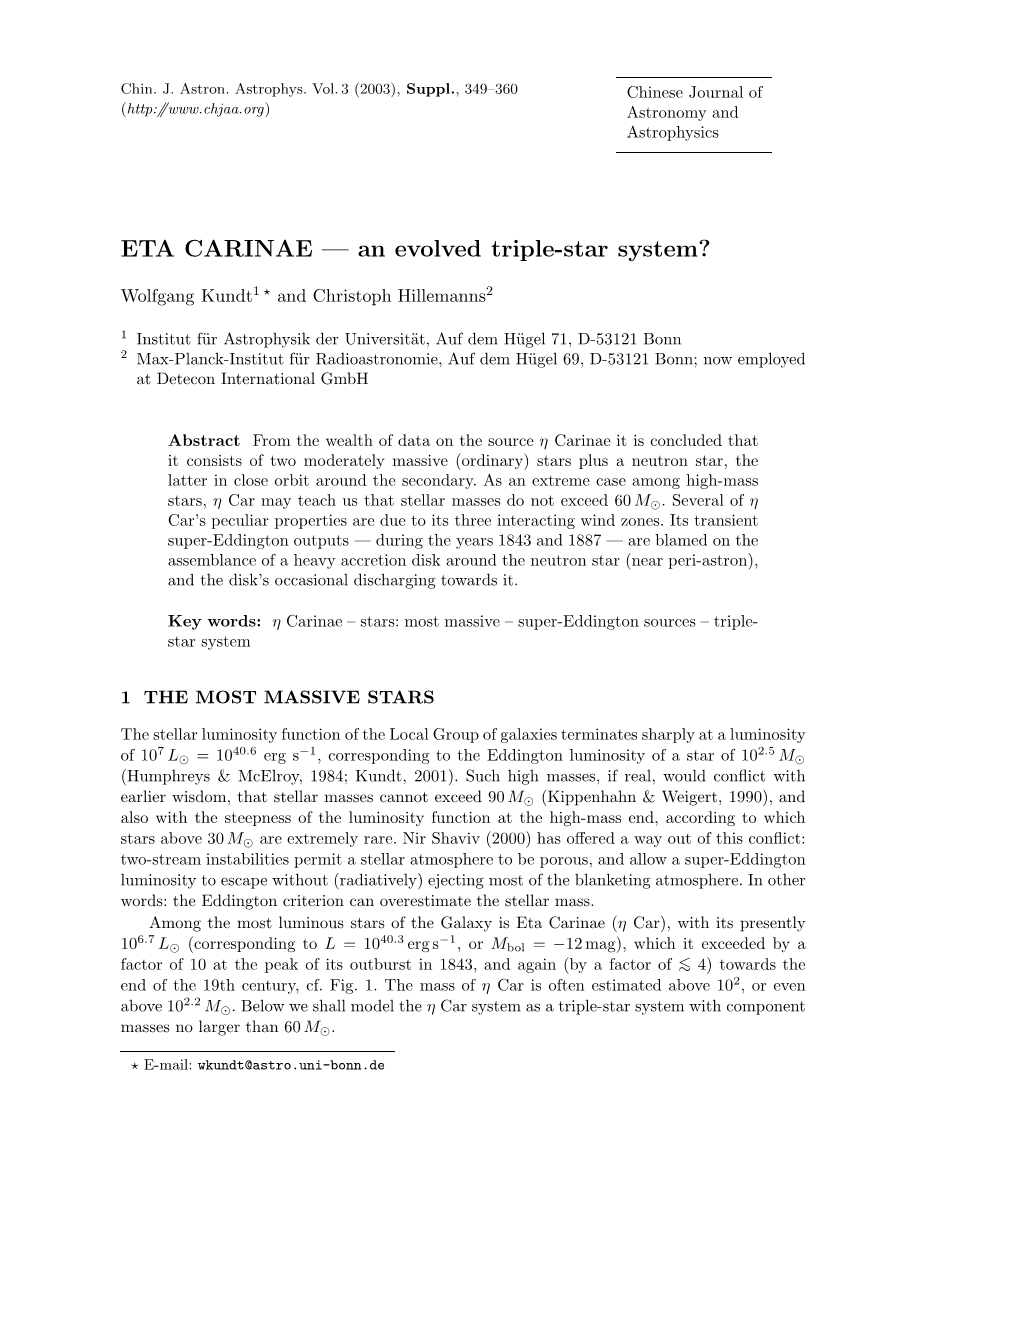 ETA CARINAE — an Evolved Triple-Star System?